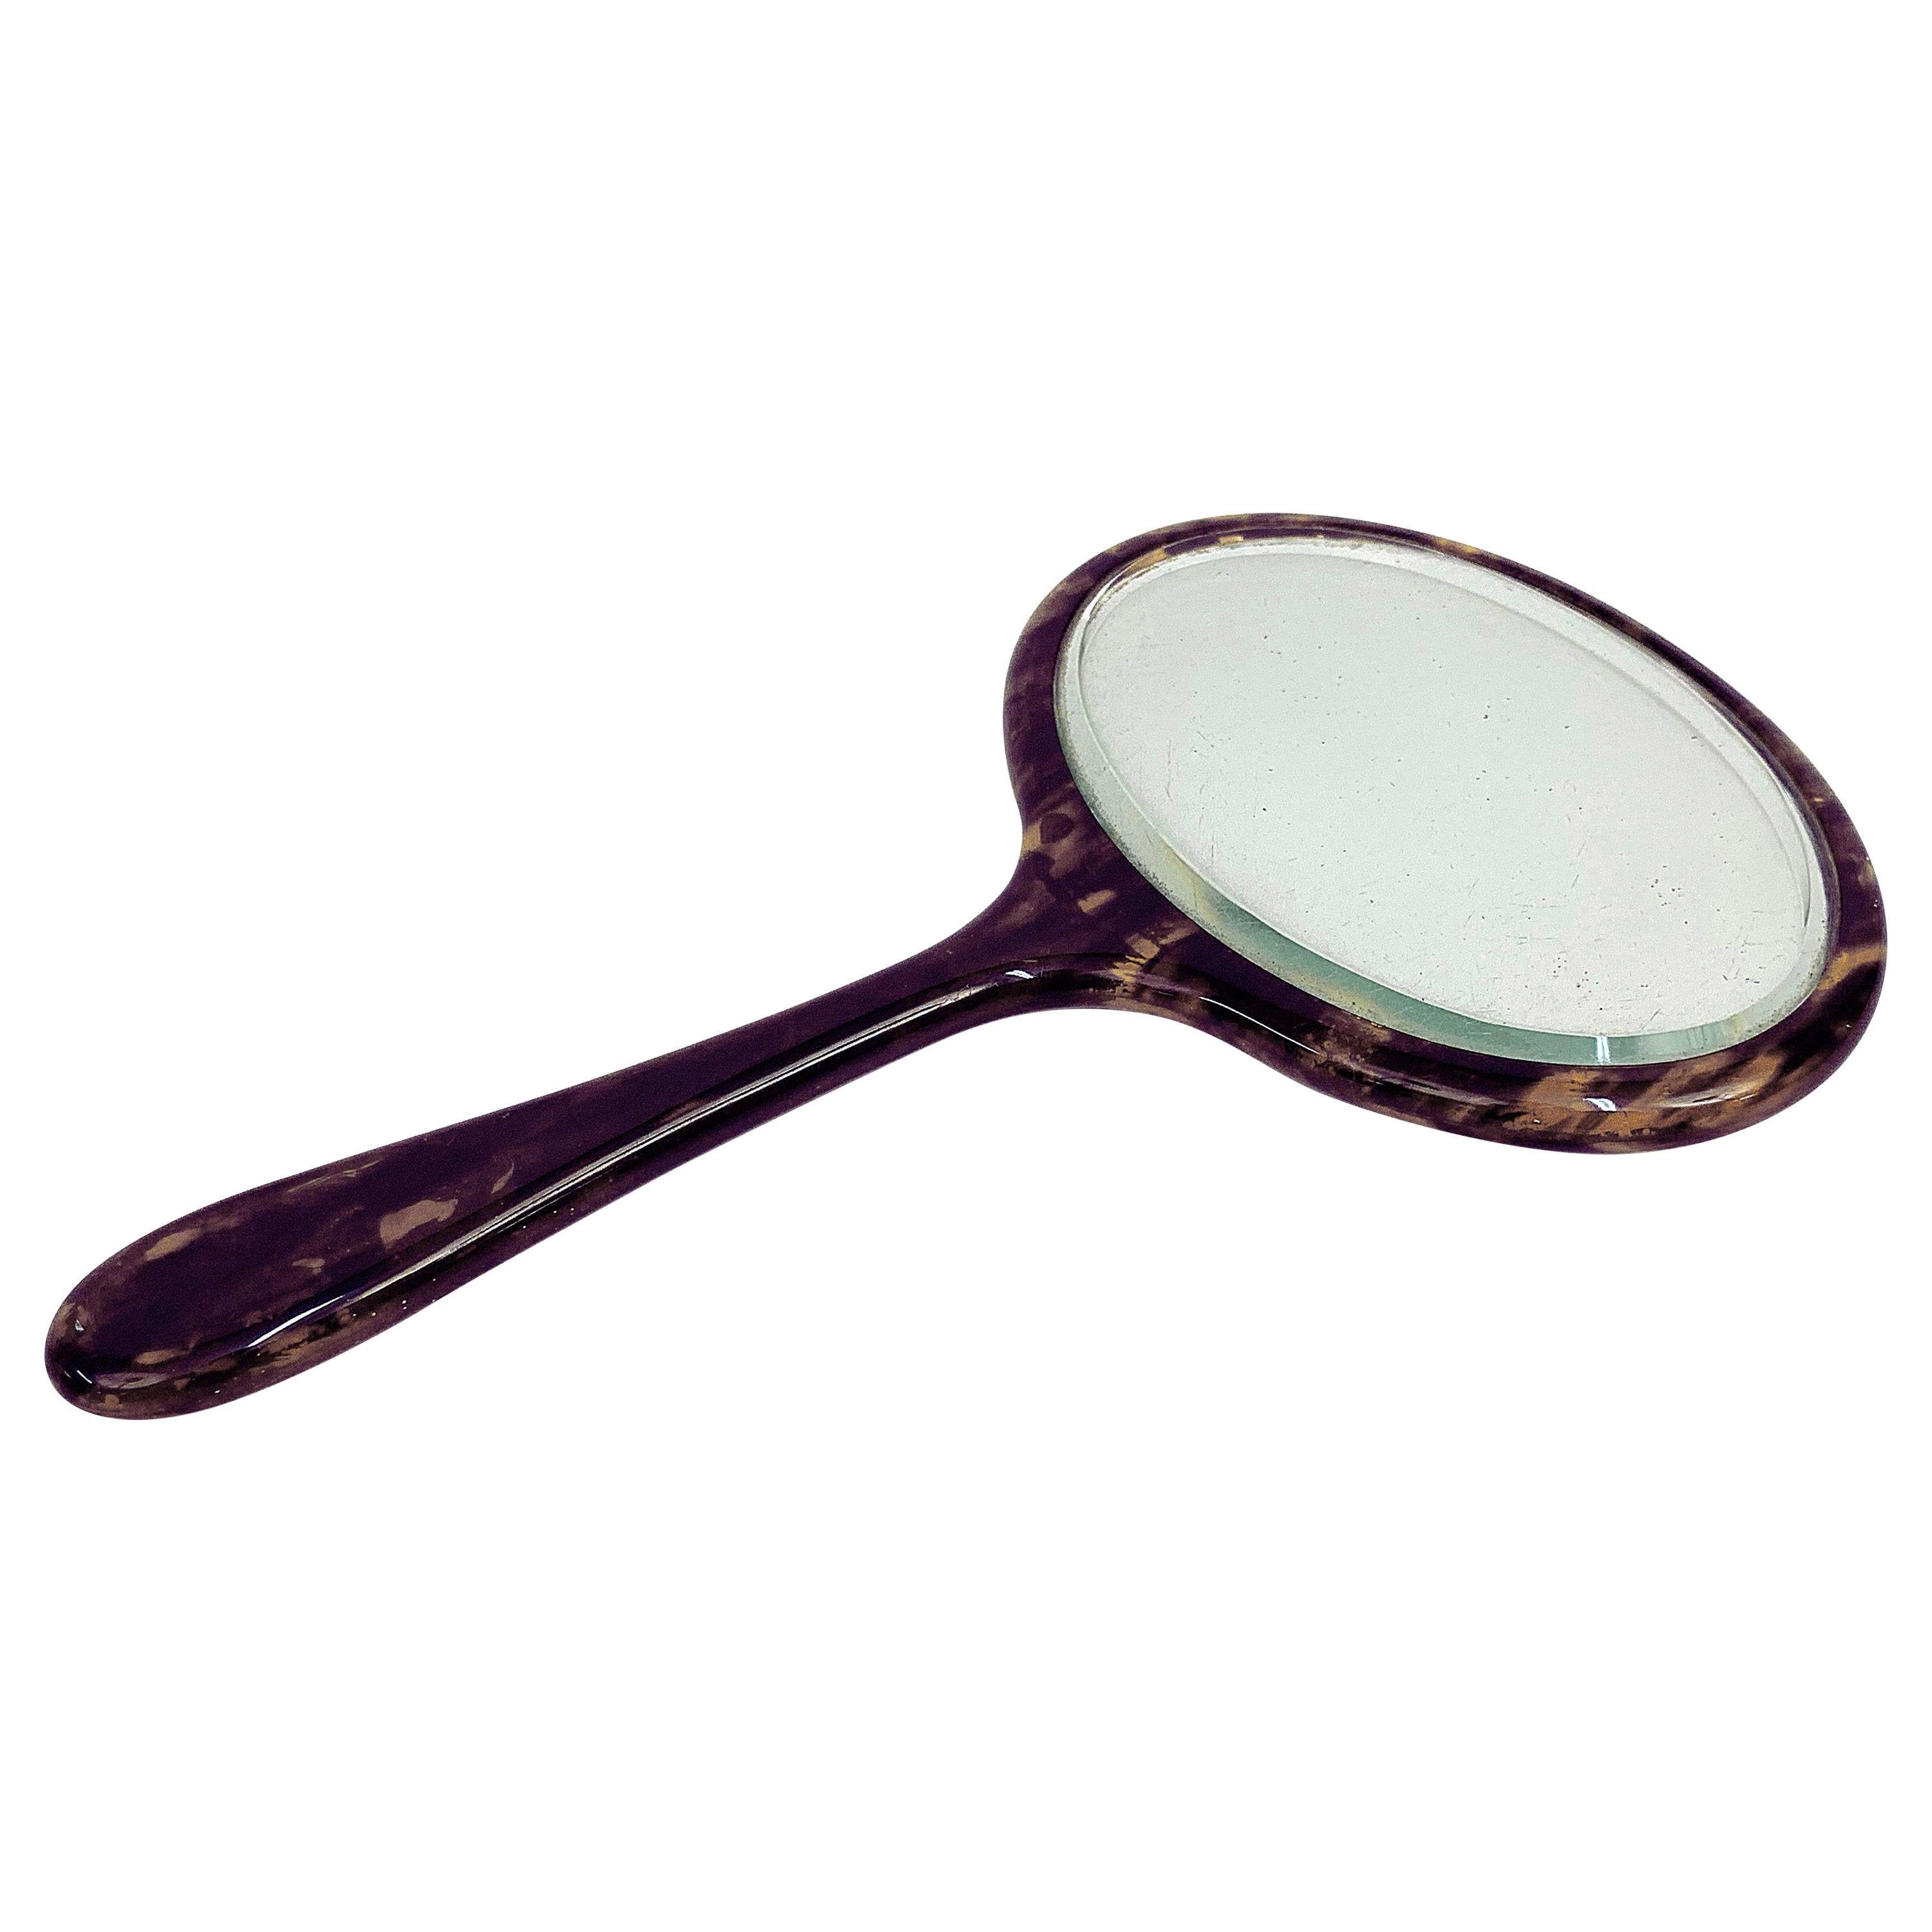 Midcentury English Oval Faux Tortoiseshell Portable Mirror, 1950s